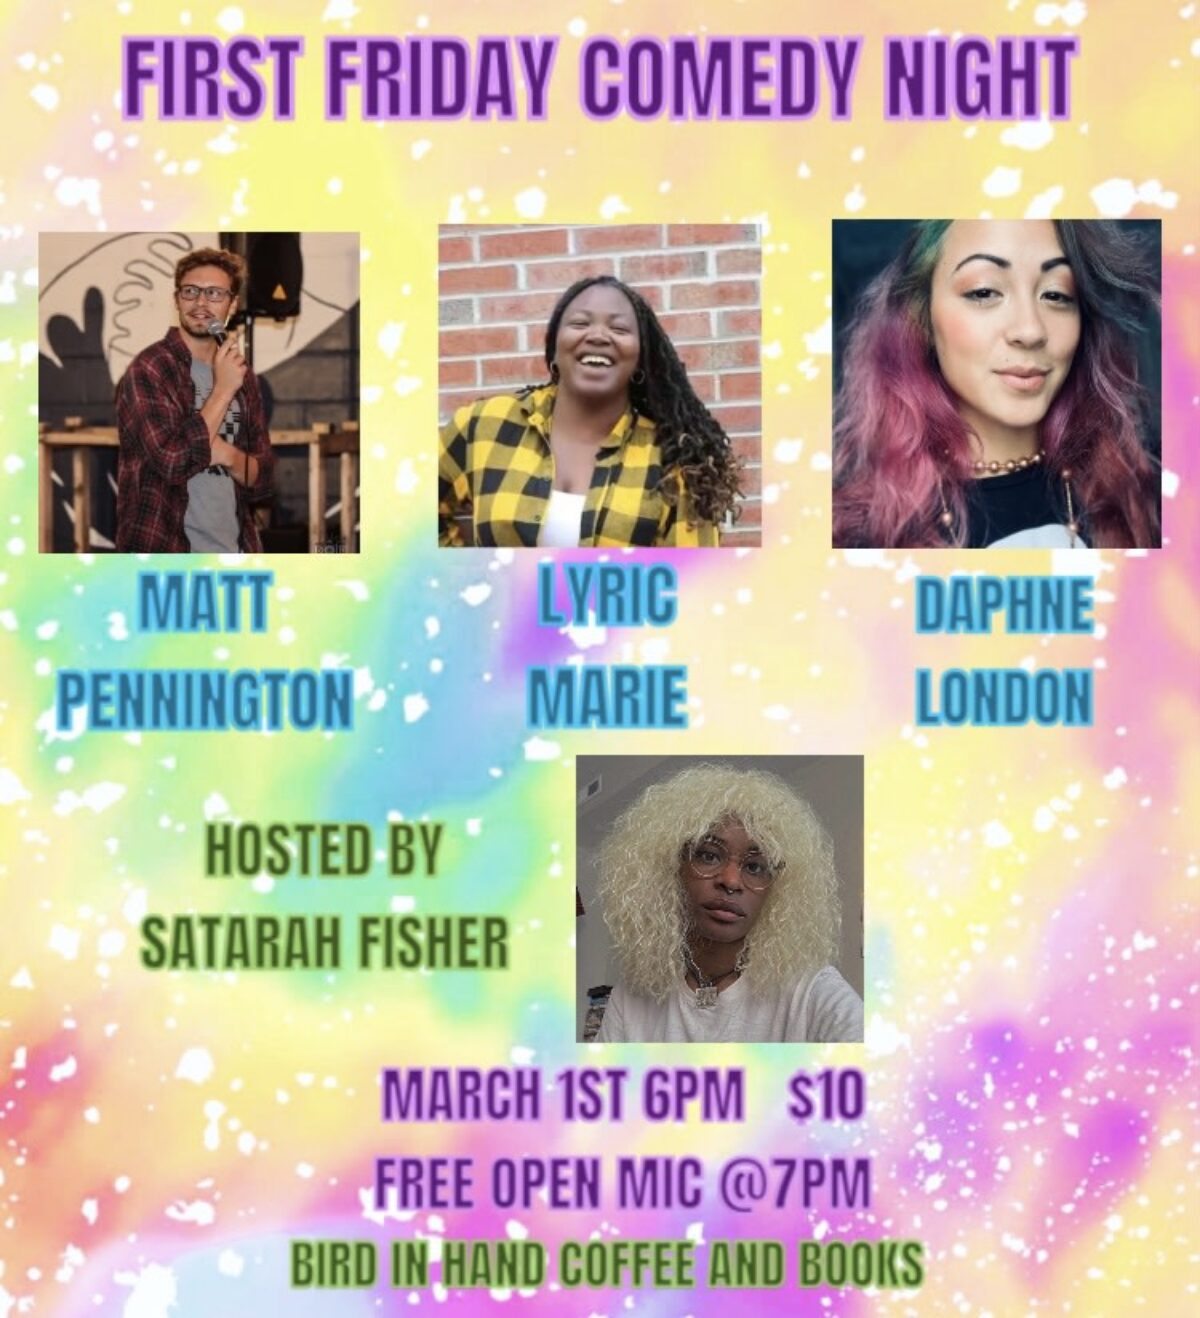 First Friday Comedy Night: Ft. Matt Pennington, Lyric Marie, & Daphne London Flyer